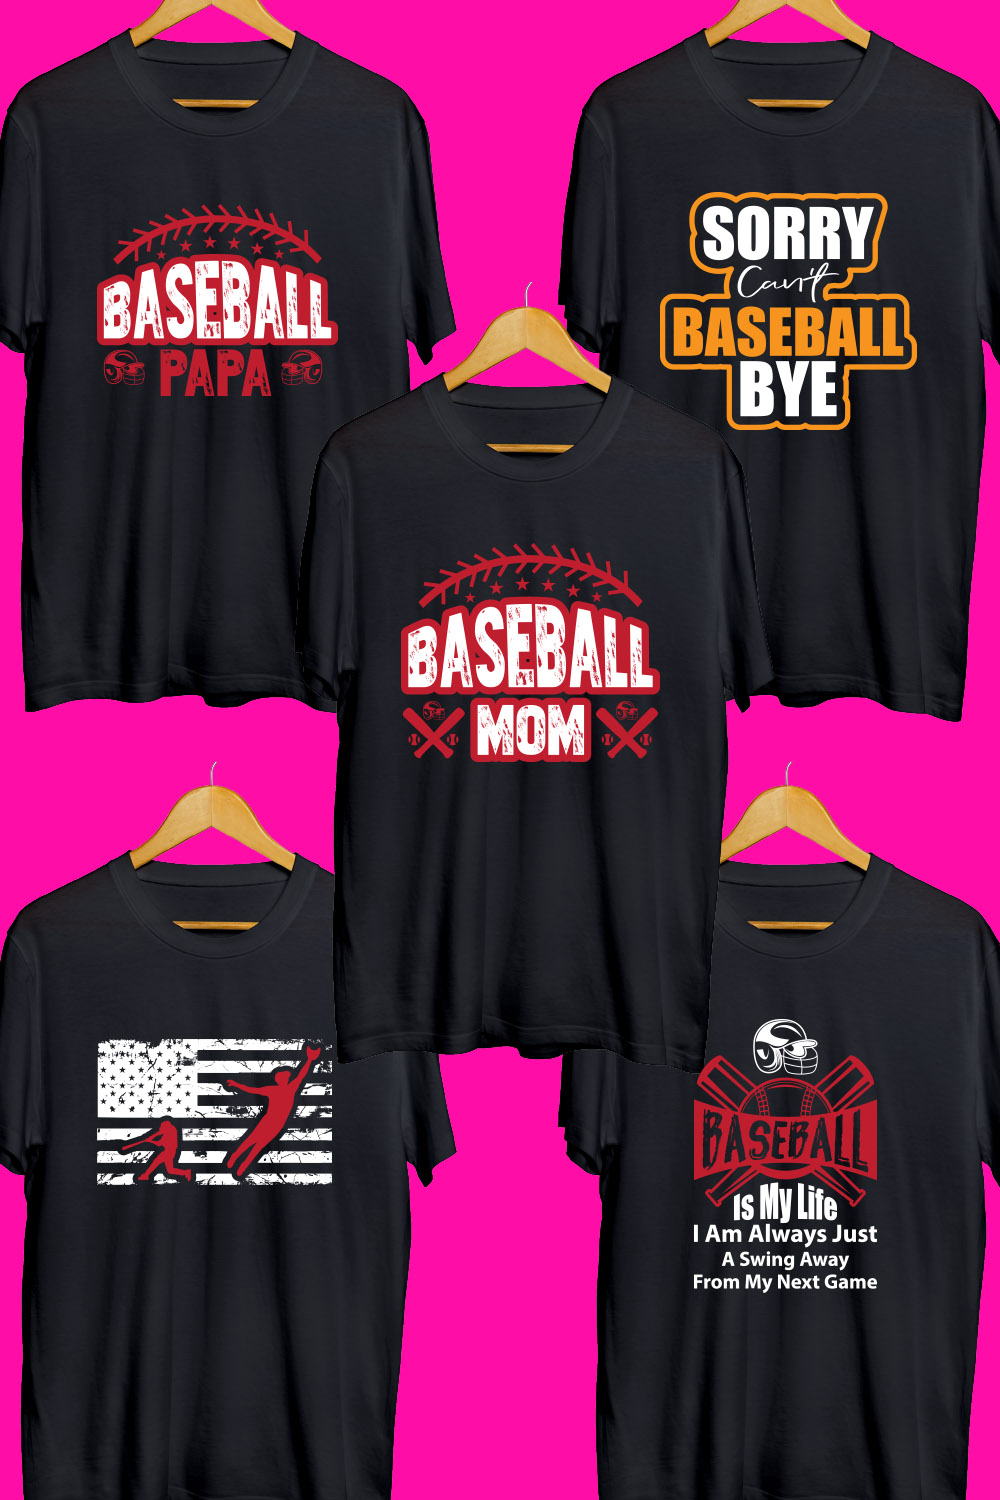 Baseball SVG T Shirt Designs Bundle pinterest preview image.